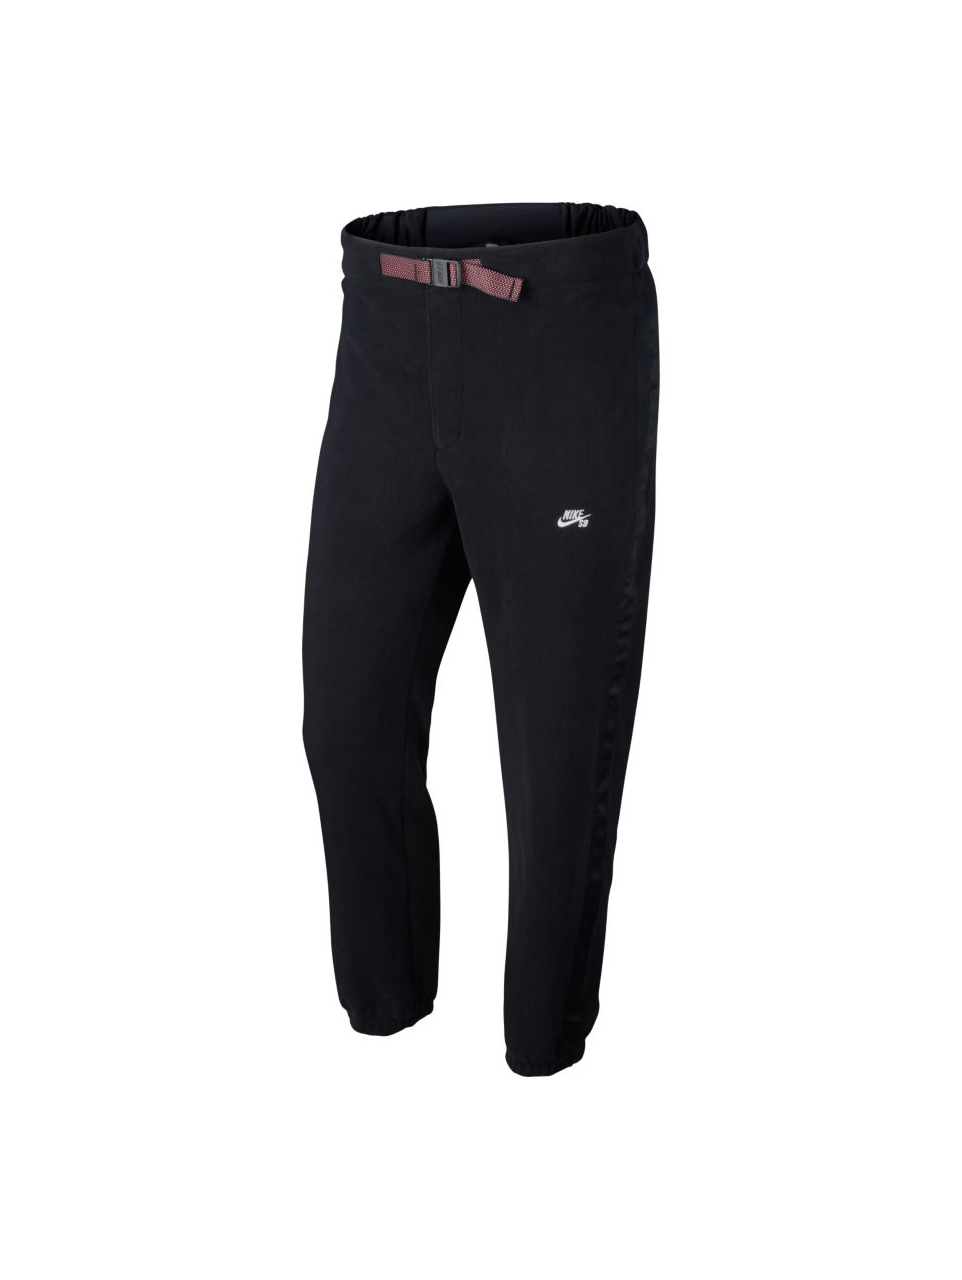 Nike SB Fleece Pant - Black / White 